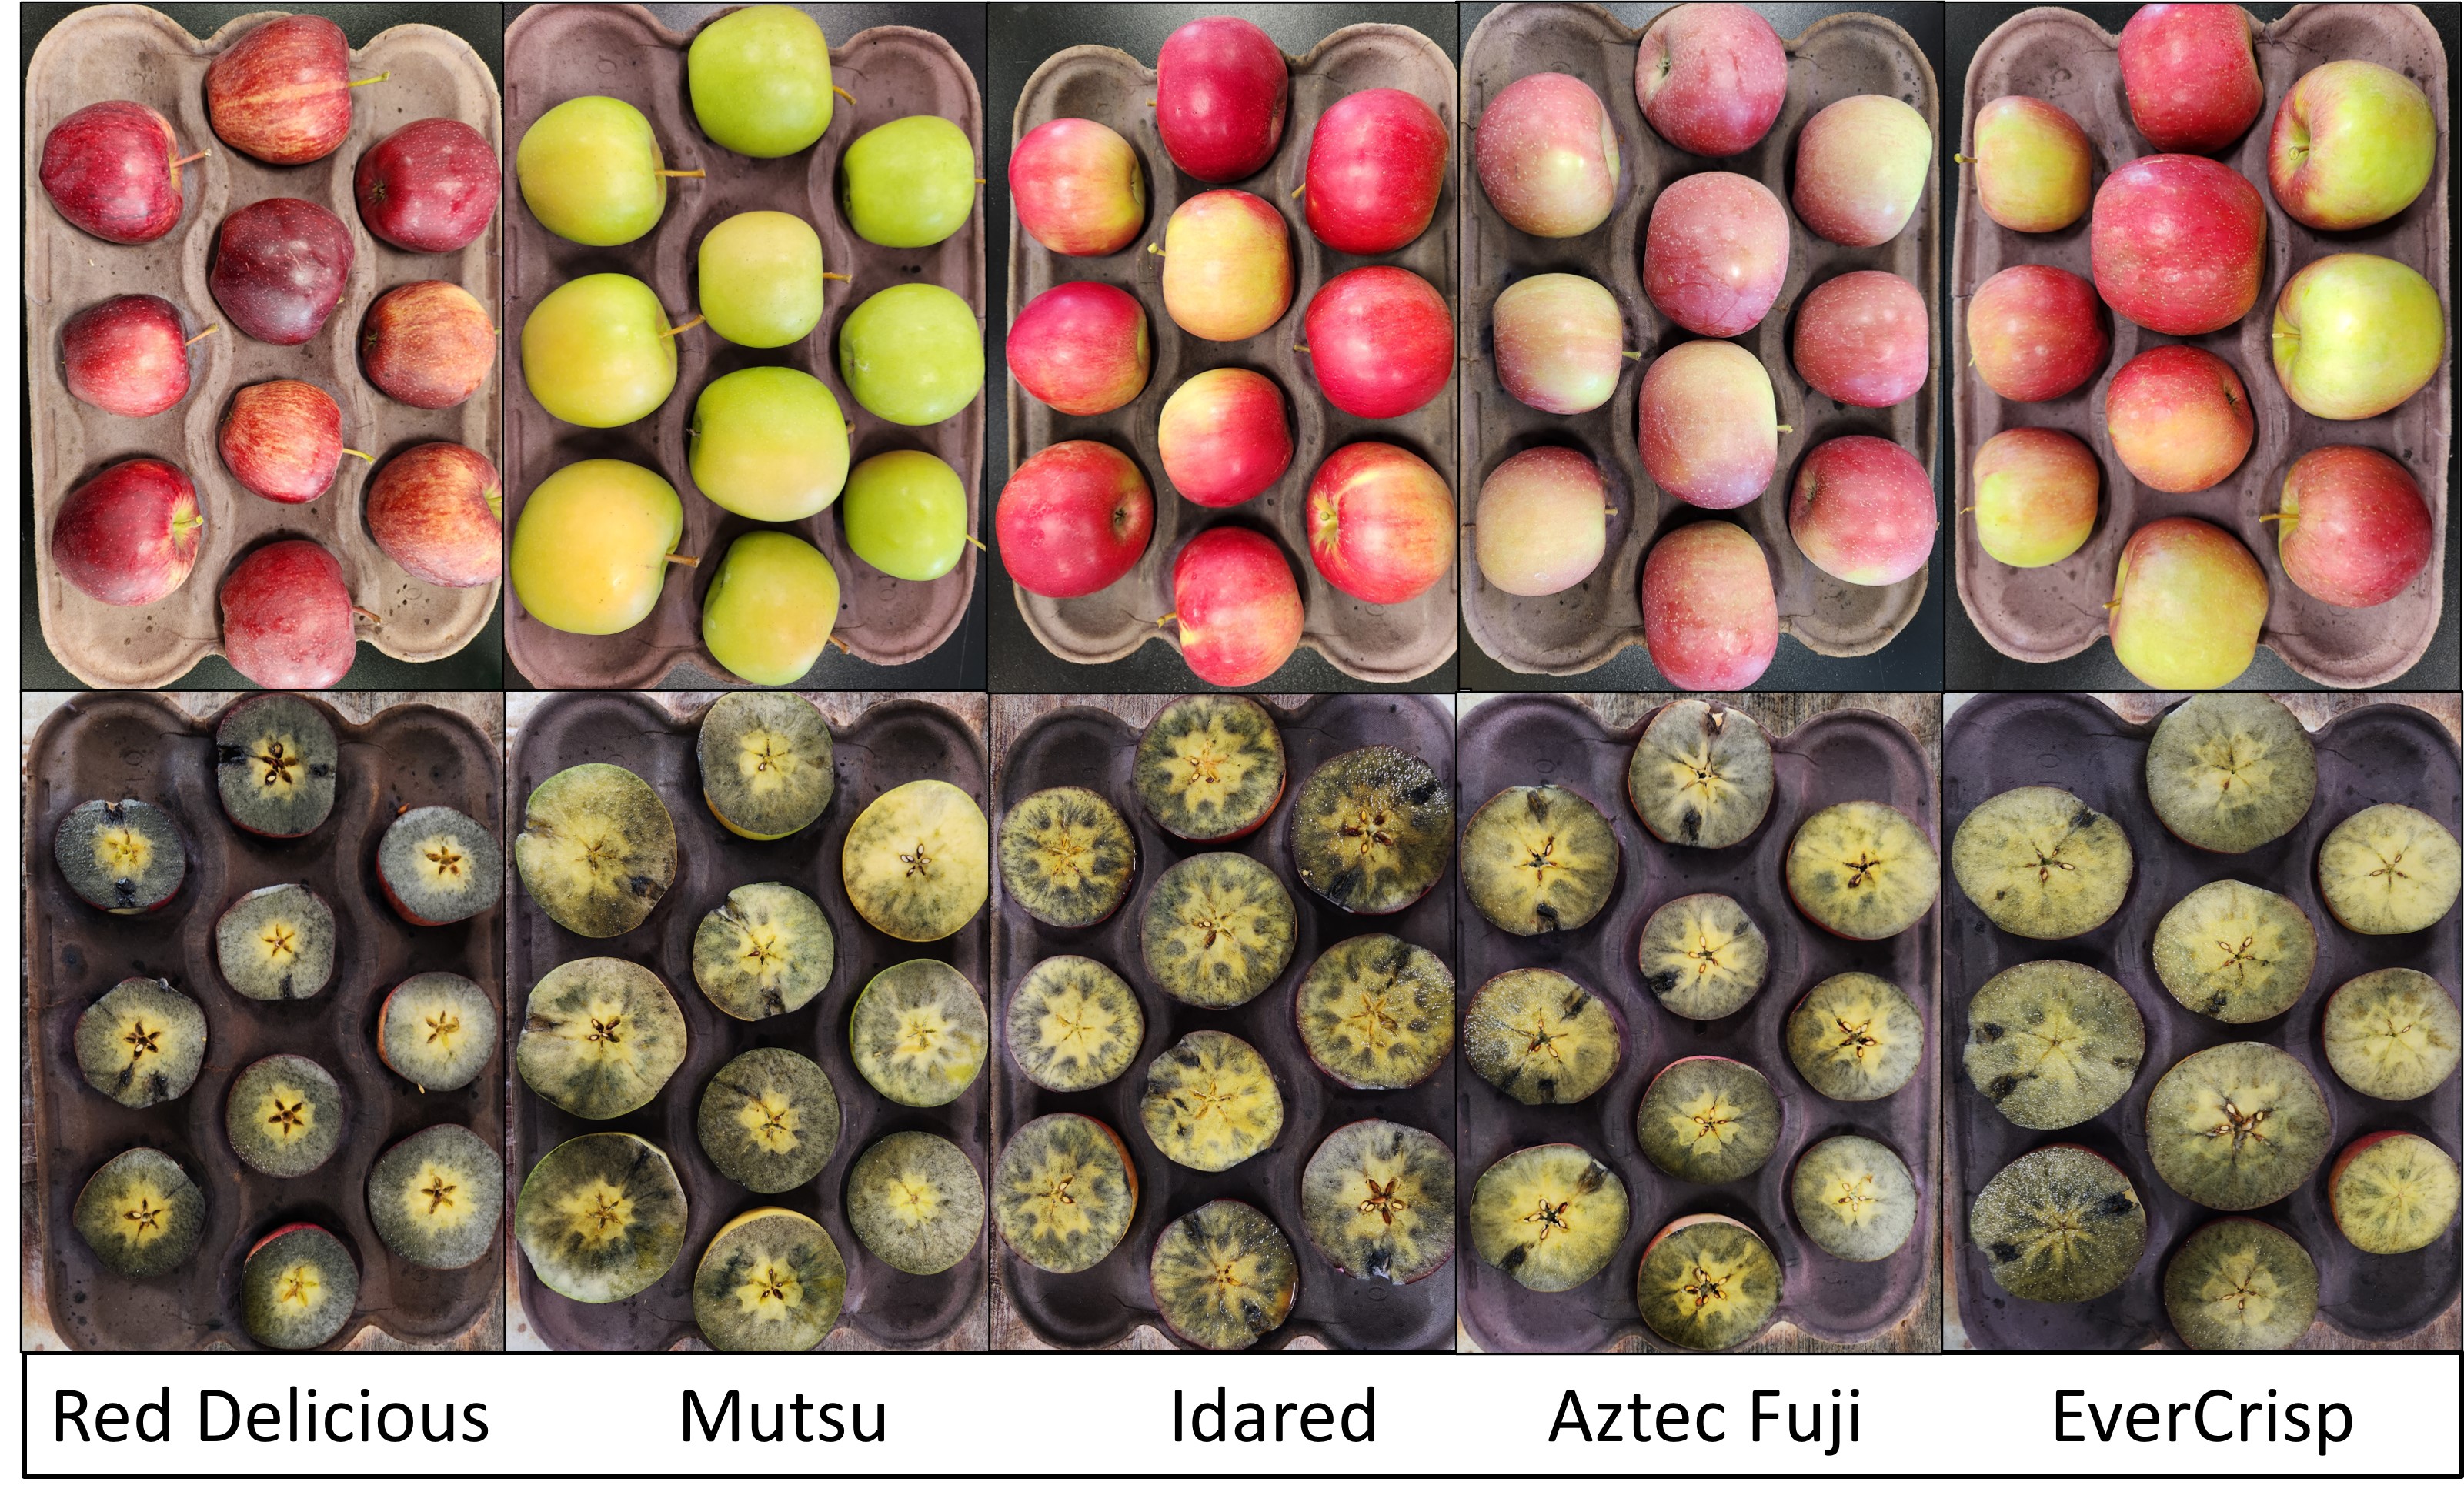 Starch staining of Red Delicious, Mutsu, Idared, Aztec Fuji and EverCrisp apples.